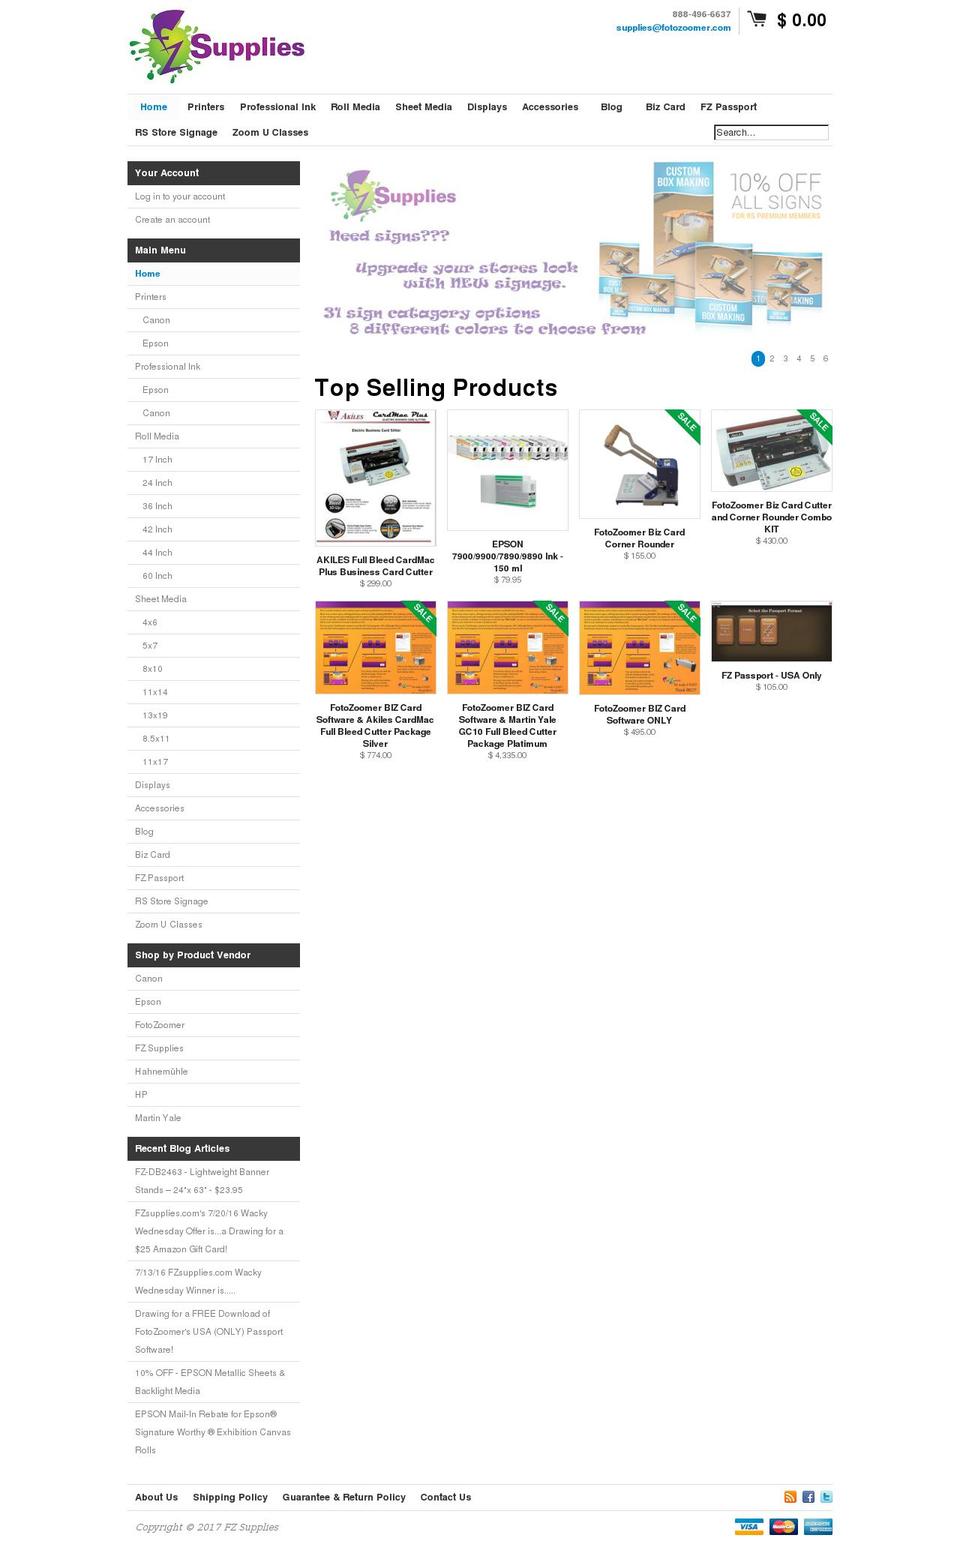 fzsupplies.com shopify website screenshot